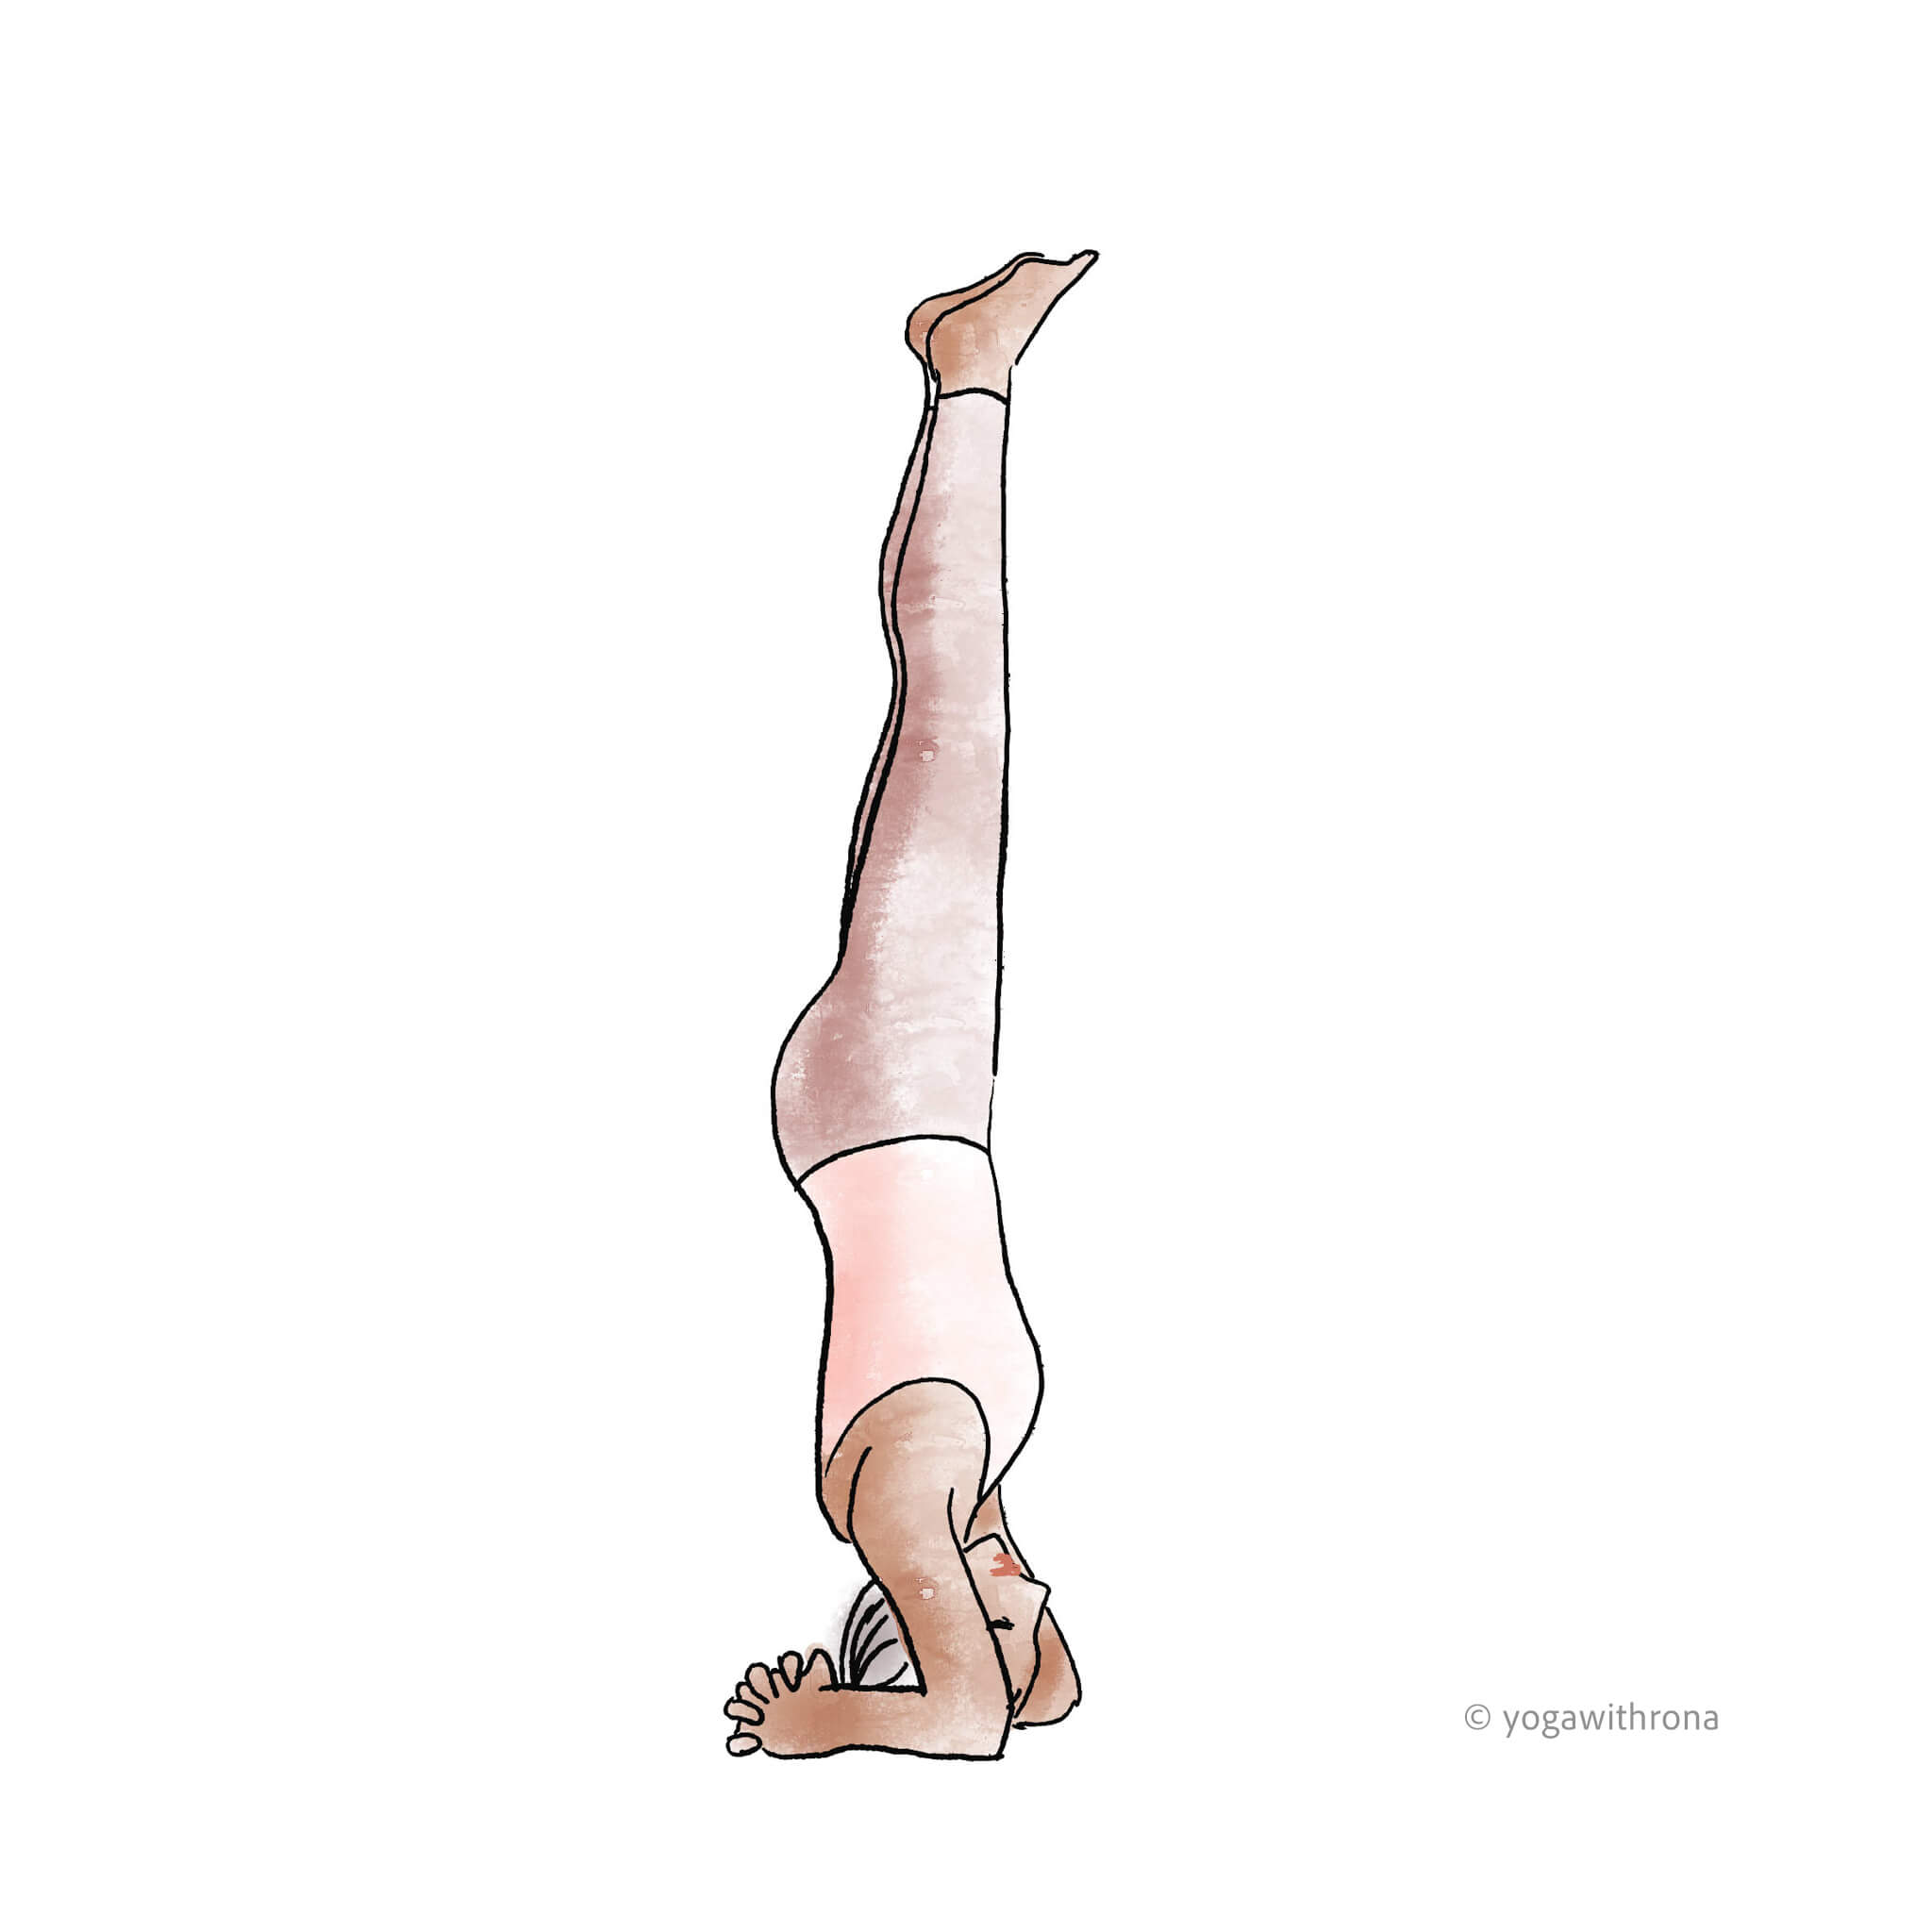 How to Do a Yoga Headstand (Sirsasana)